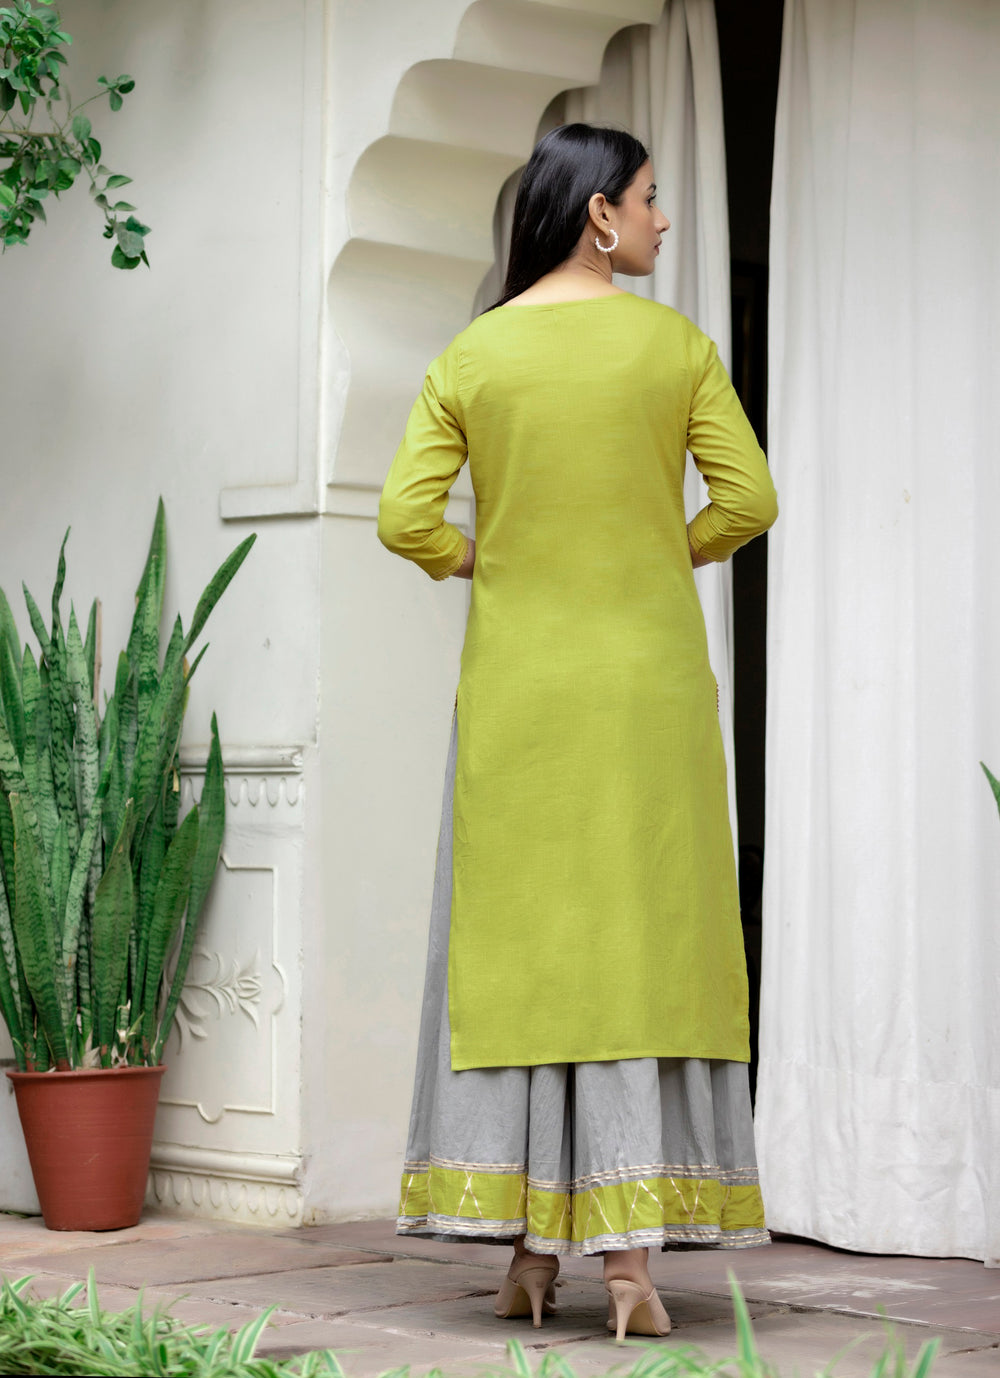 Shop For Green Sharara dress For wedding